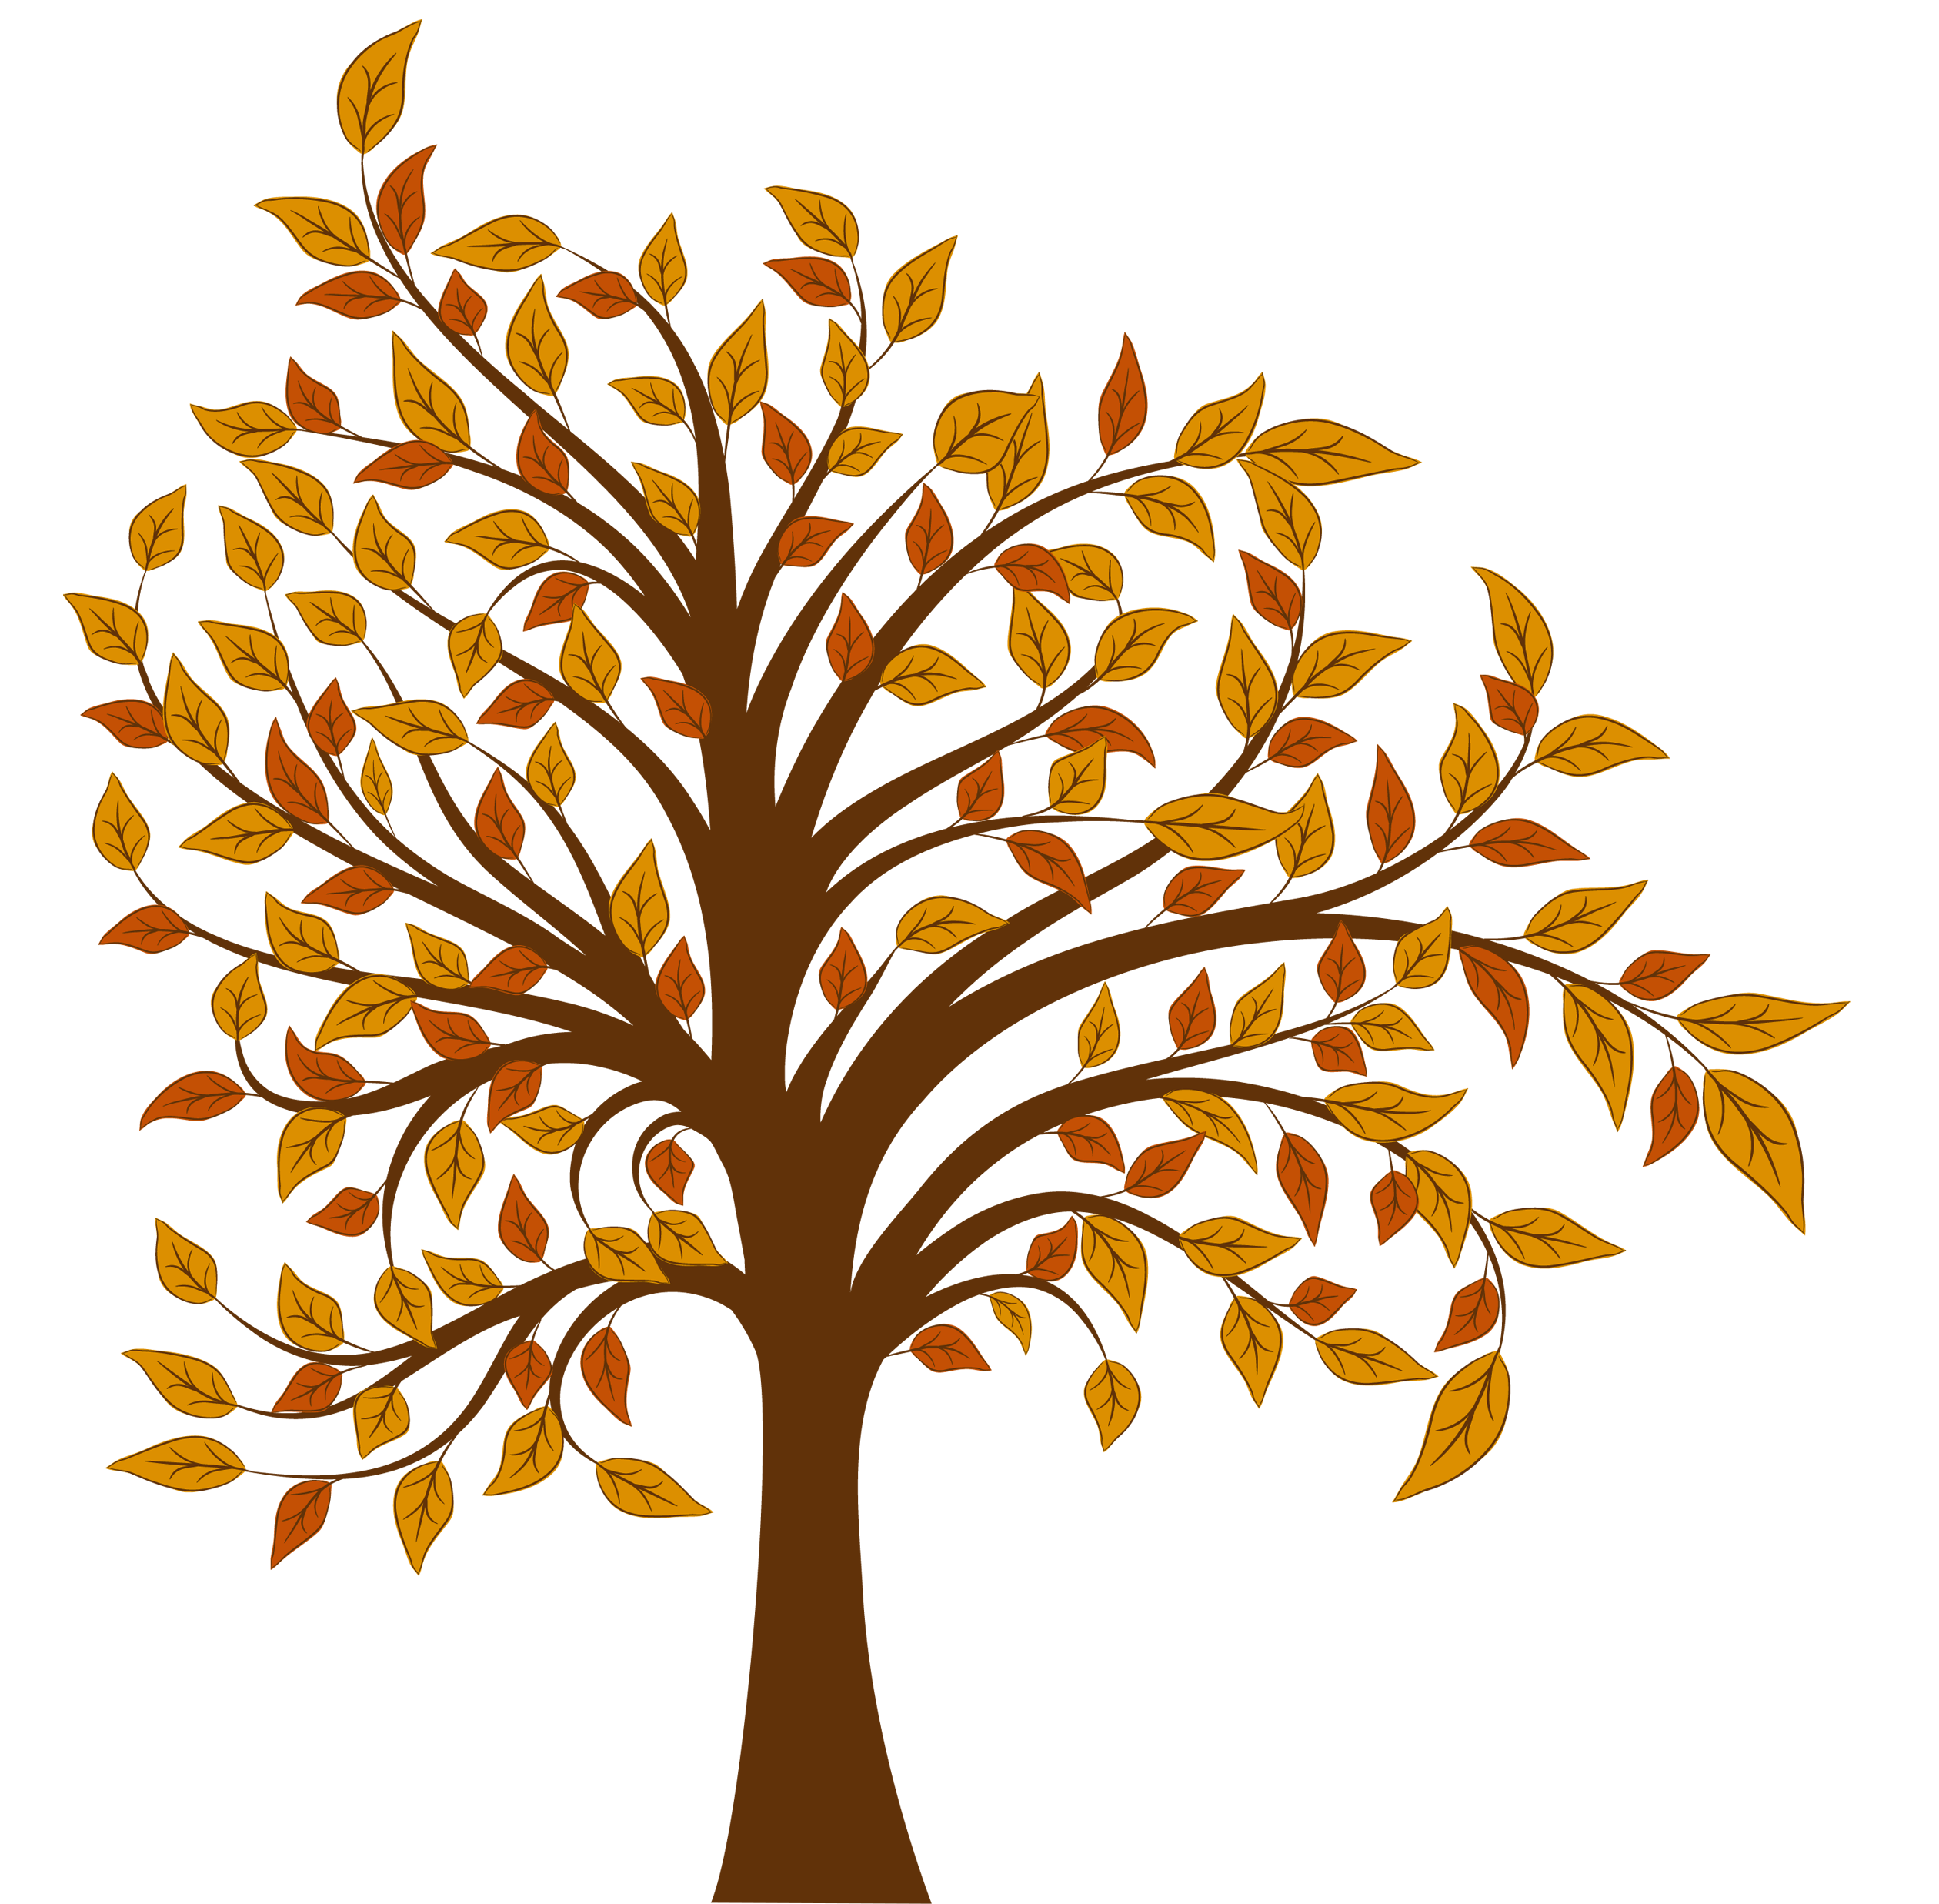 autumn tree clip art free